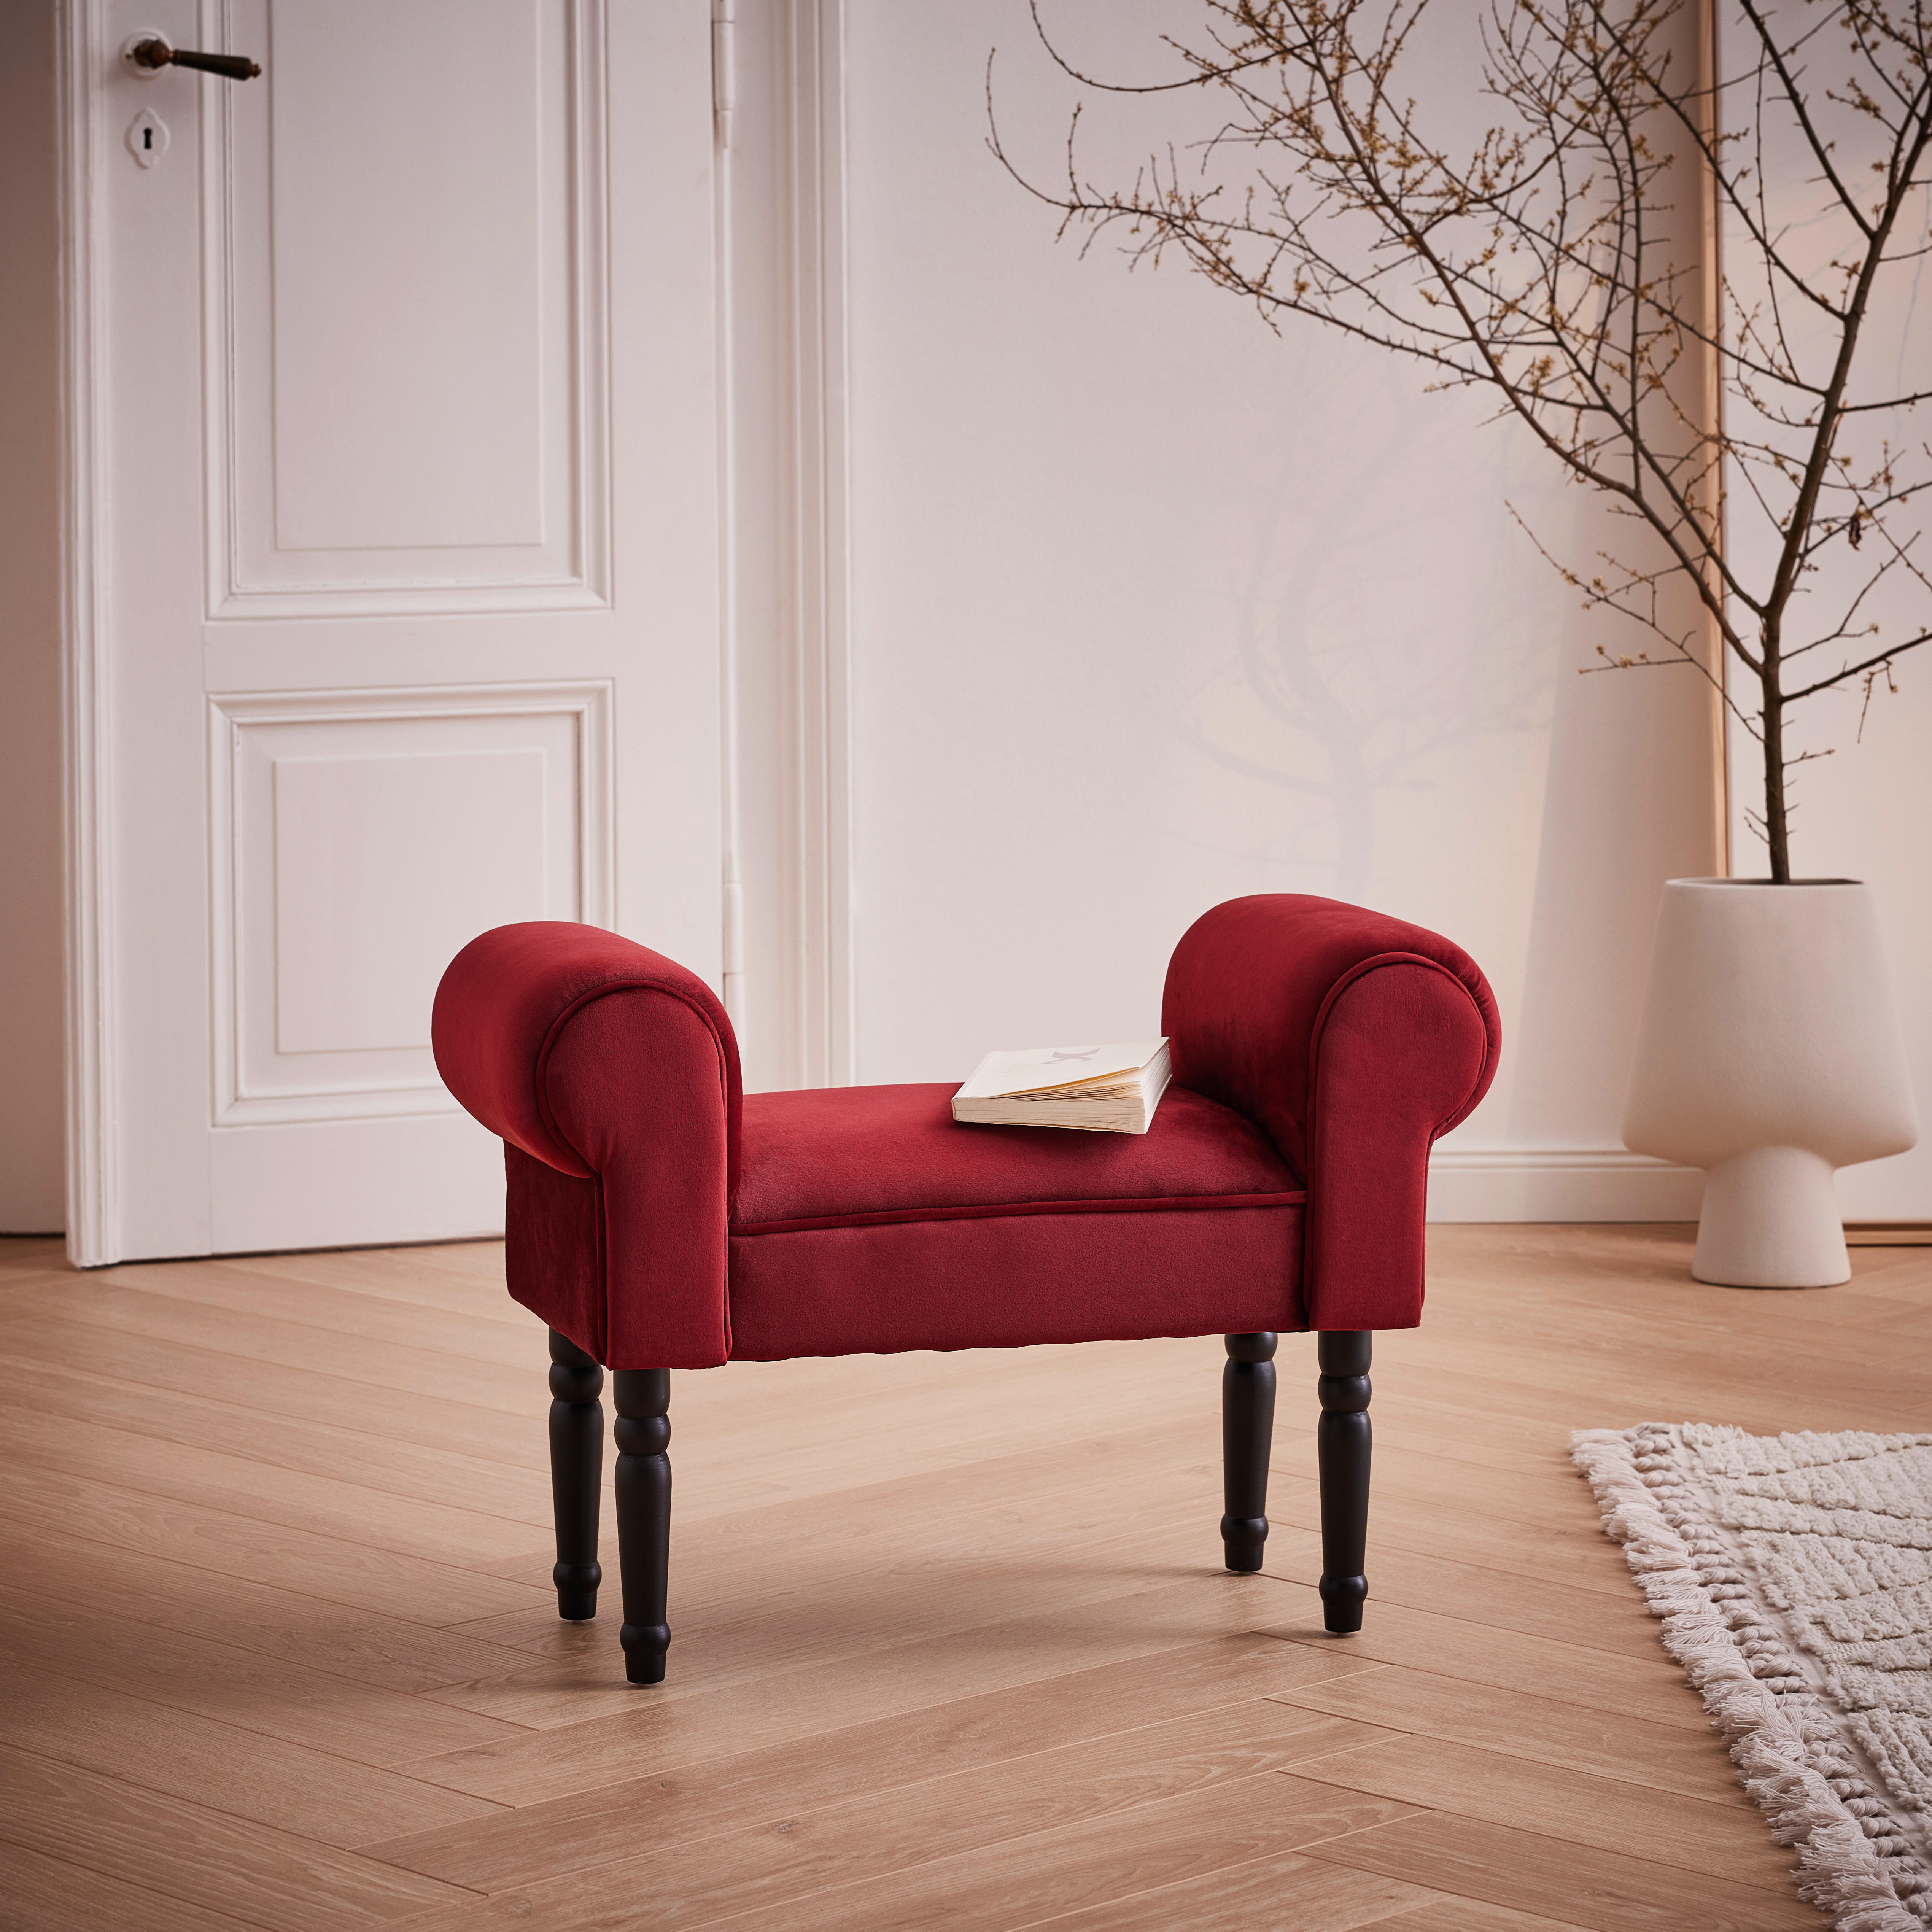 TABURET in lemn, textil negru, roșu burgund  - roșu burgund/negru, Trend, lemn/textil (76/54/30cm) - Xora